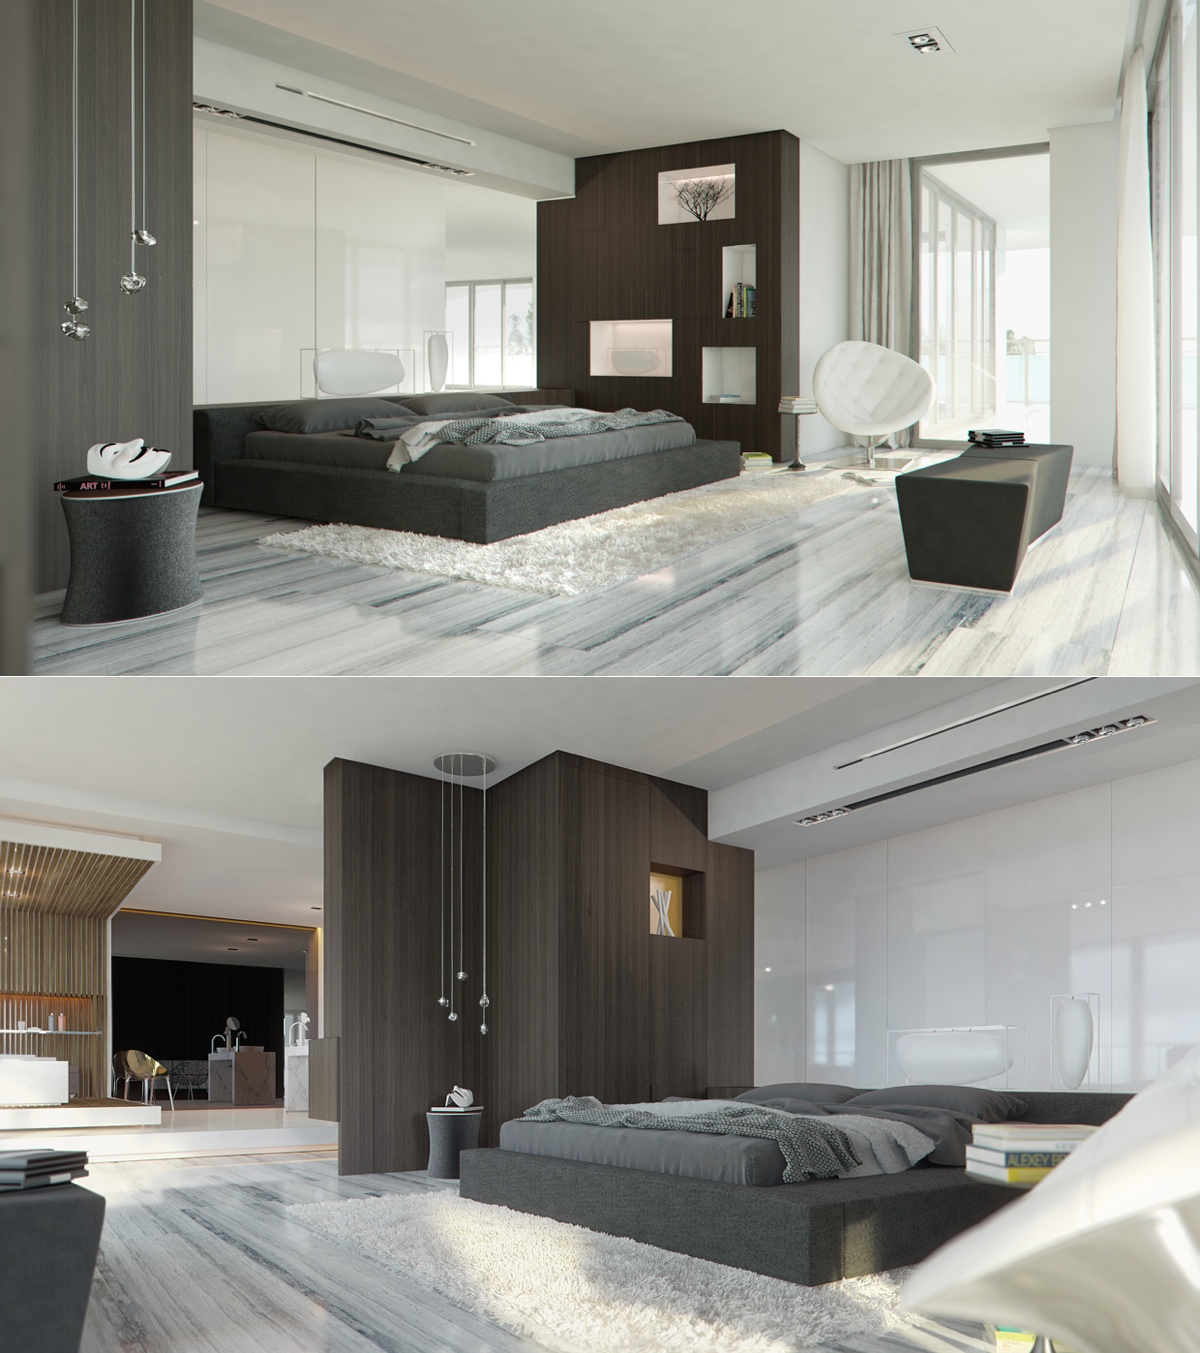 elagnt gray bedroom decor "width =" 1200 "height =" 1353 "srcset =" https://mileray.com/wp-content/uploads/2020/05/1588508375_289_Types-of-Elegant-Bedroom-Designs-Which-Combine-With-Perfect-Organizing.jpeg 1200w, https://mileray.com /wp-content/uploads/2016/10/Albert-Mizuno2-266x300.jpeg 266w, https://mileray.com/wp-content/uploads/2016/10/Albert-Mizuno2-768x866.jpeg 768w, https: / /mileray.com/wp-content/uploads/2016/10/Albert-Mizuno2-908x1024.jpeg 908w, https://mileray.com/wp-content/uploads/2016/10/Albert-Mizuno2-696x785.jpeg 696w , https://mileray.com/wp-content/uploads/2016/10/Albert-Mizuno2-1068x1204.jpeg 1068w, https://mileray.com/wp-content/uploads/2016/10/Albert-Mizuno2- 373x420.jpeg 373w "sizes =" (maximum width: 1200px) 100vw, 1200px